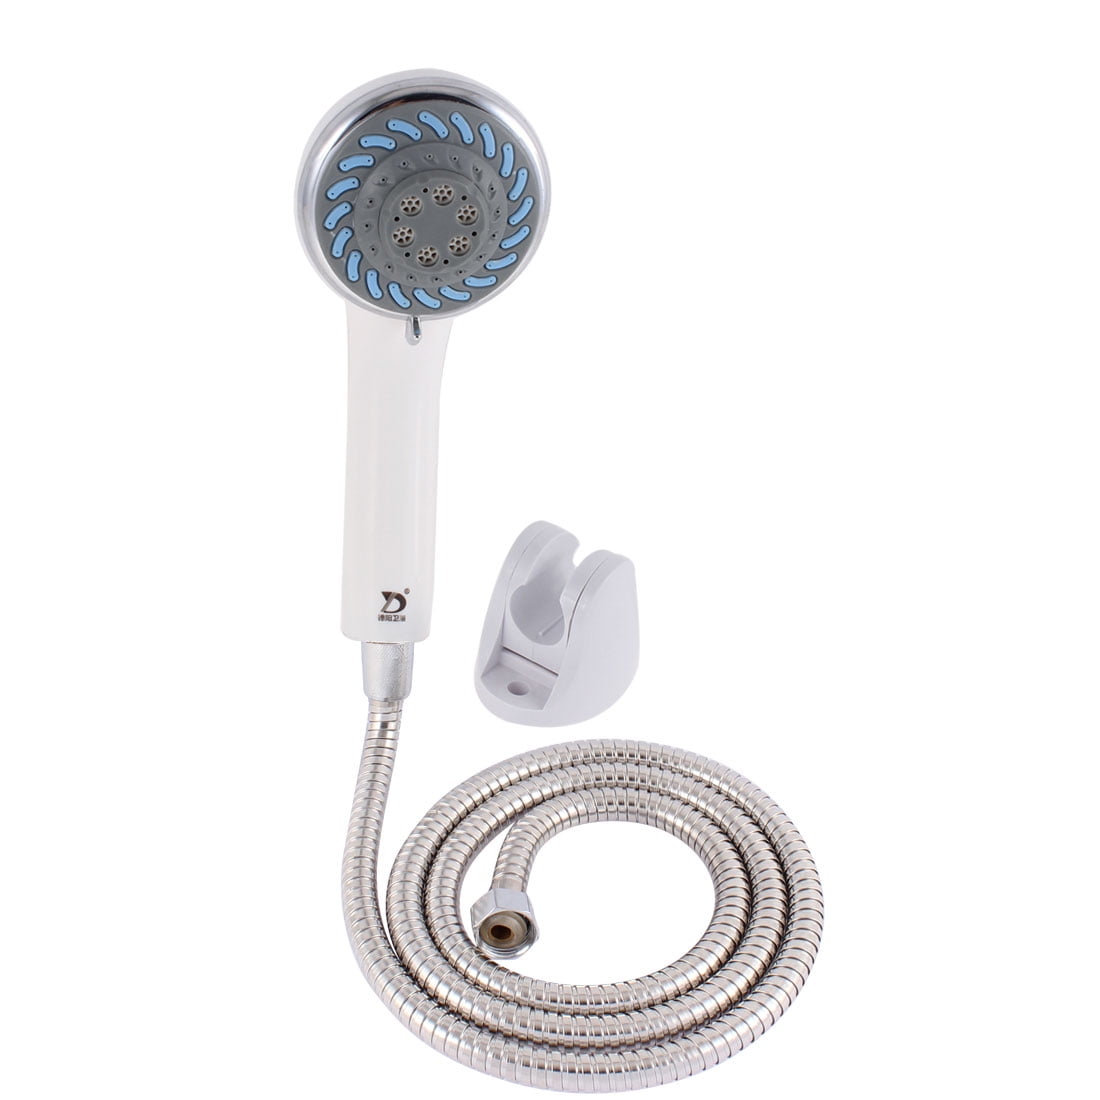 9.4" LED Bathroom Rainfall Handheld Shower Head Sprayer Wall Mount Mixer Faucet